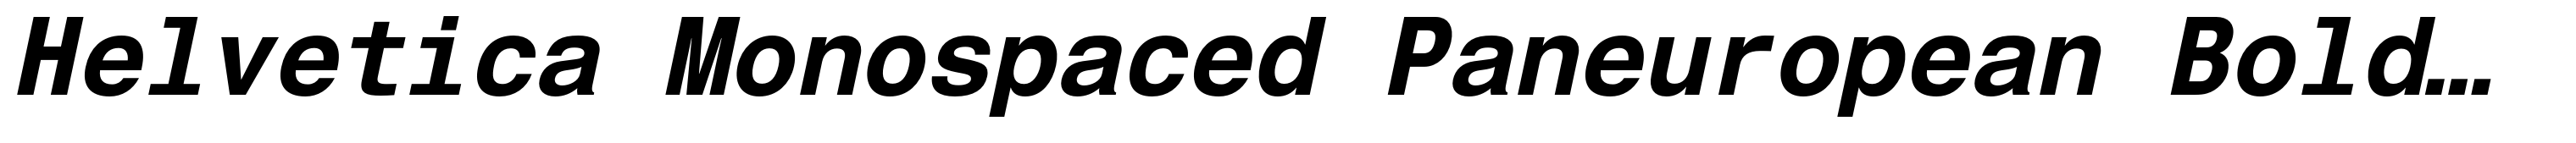 Helvetica Monospaced Paneuropean Bold Italic